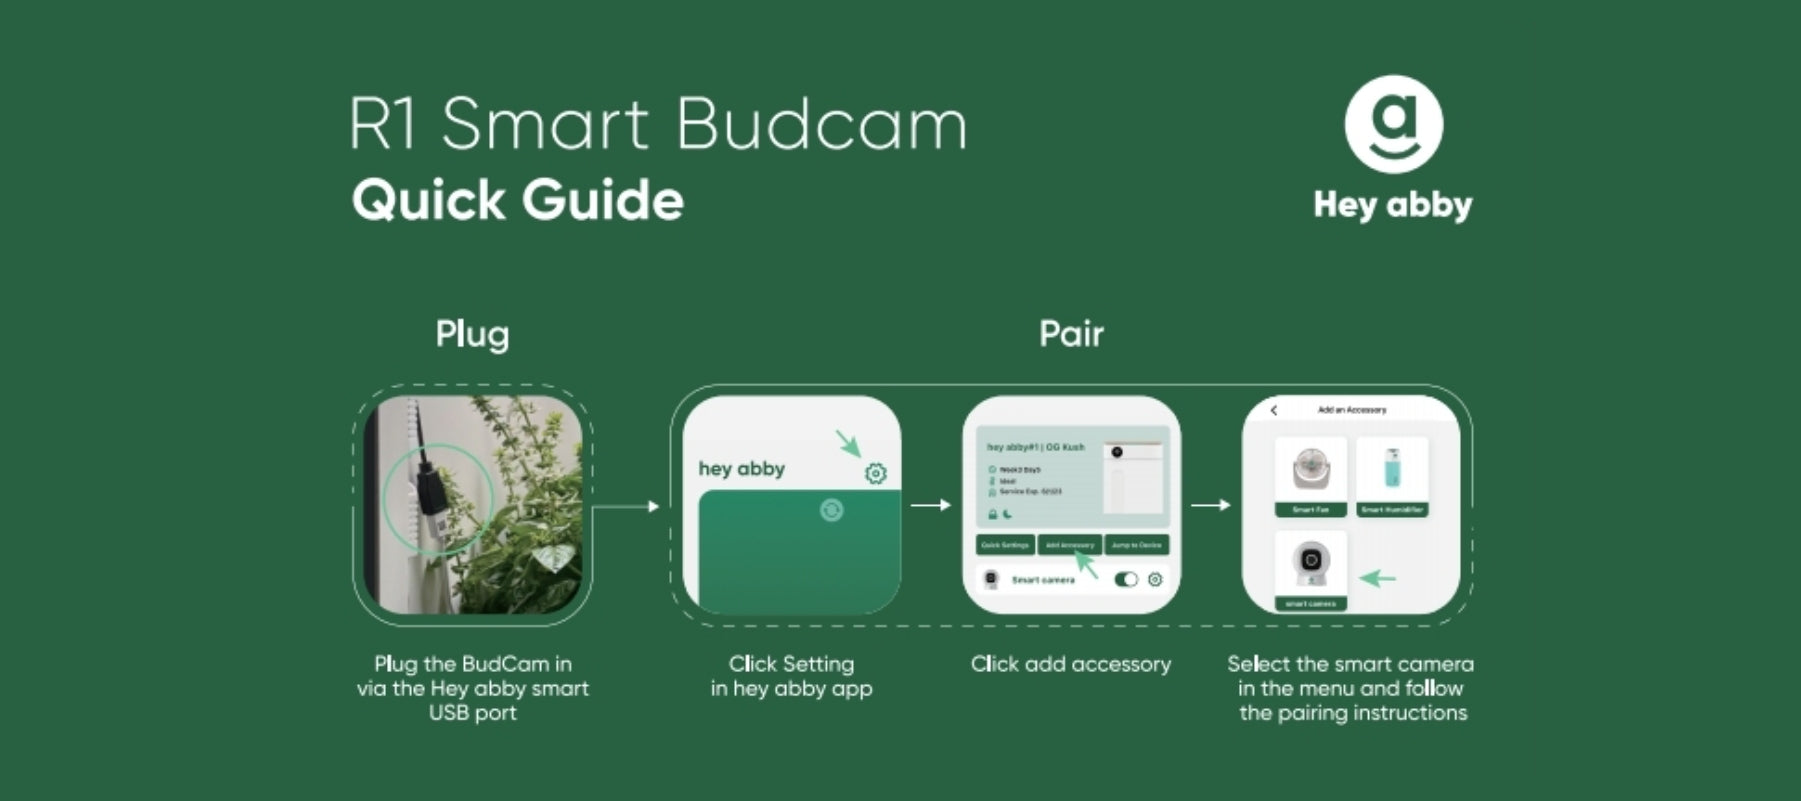 steps of using Hey Abby R1 Smart Budcam